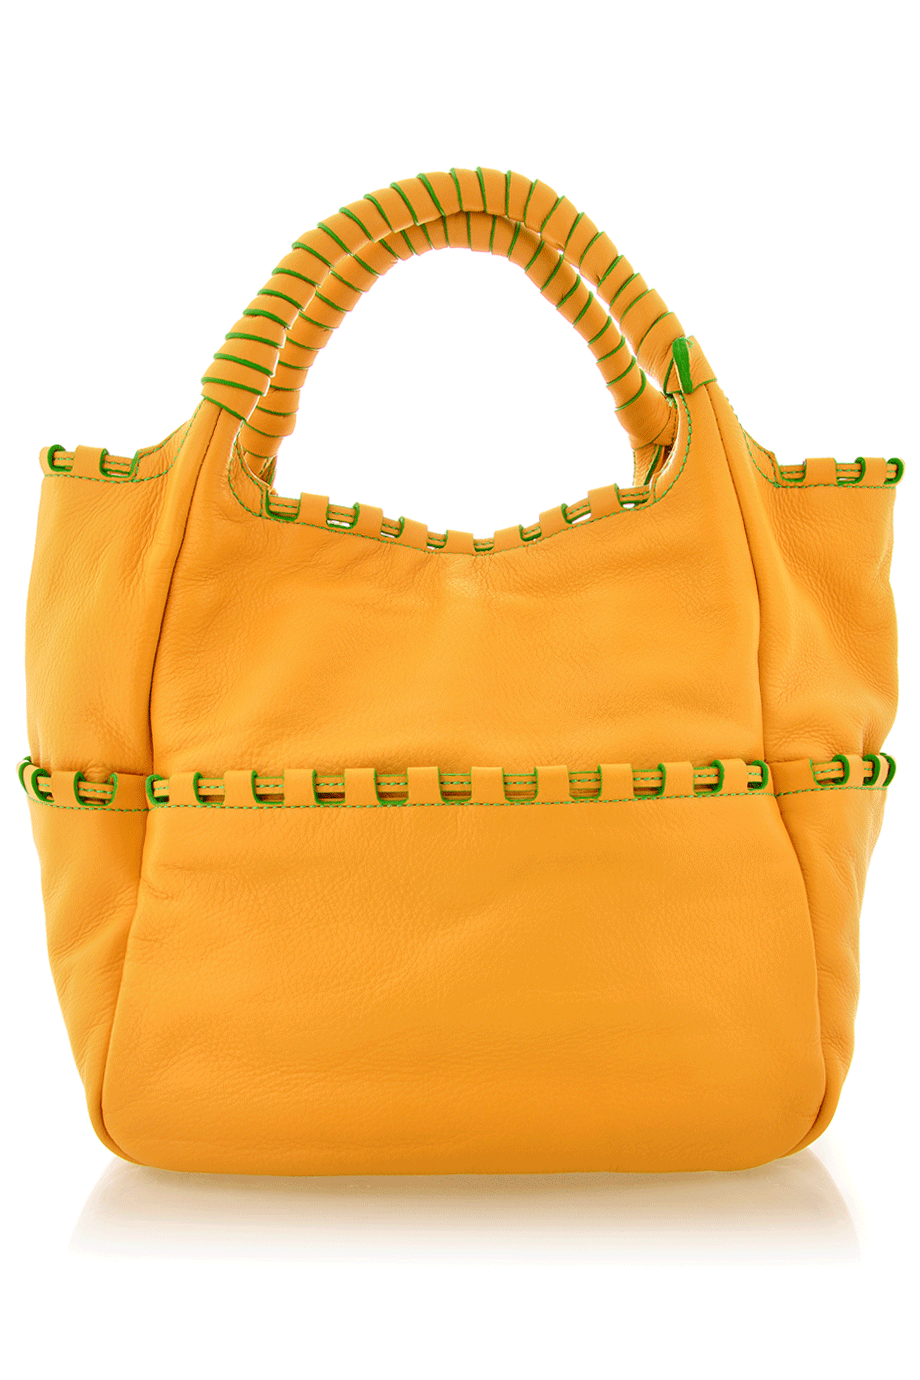 Alston Yellow Leather Bag